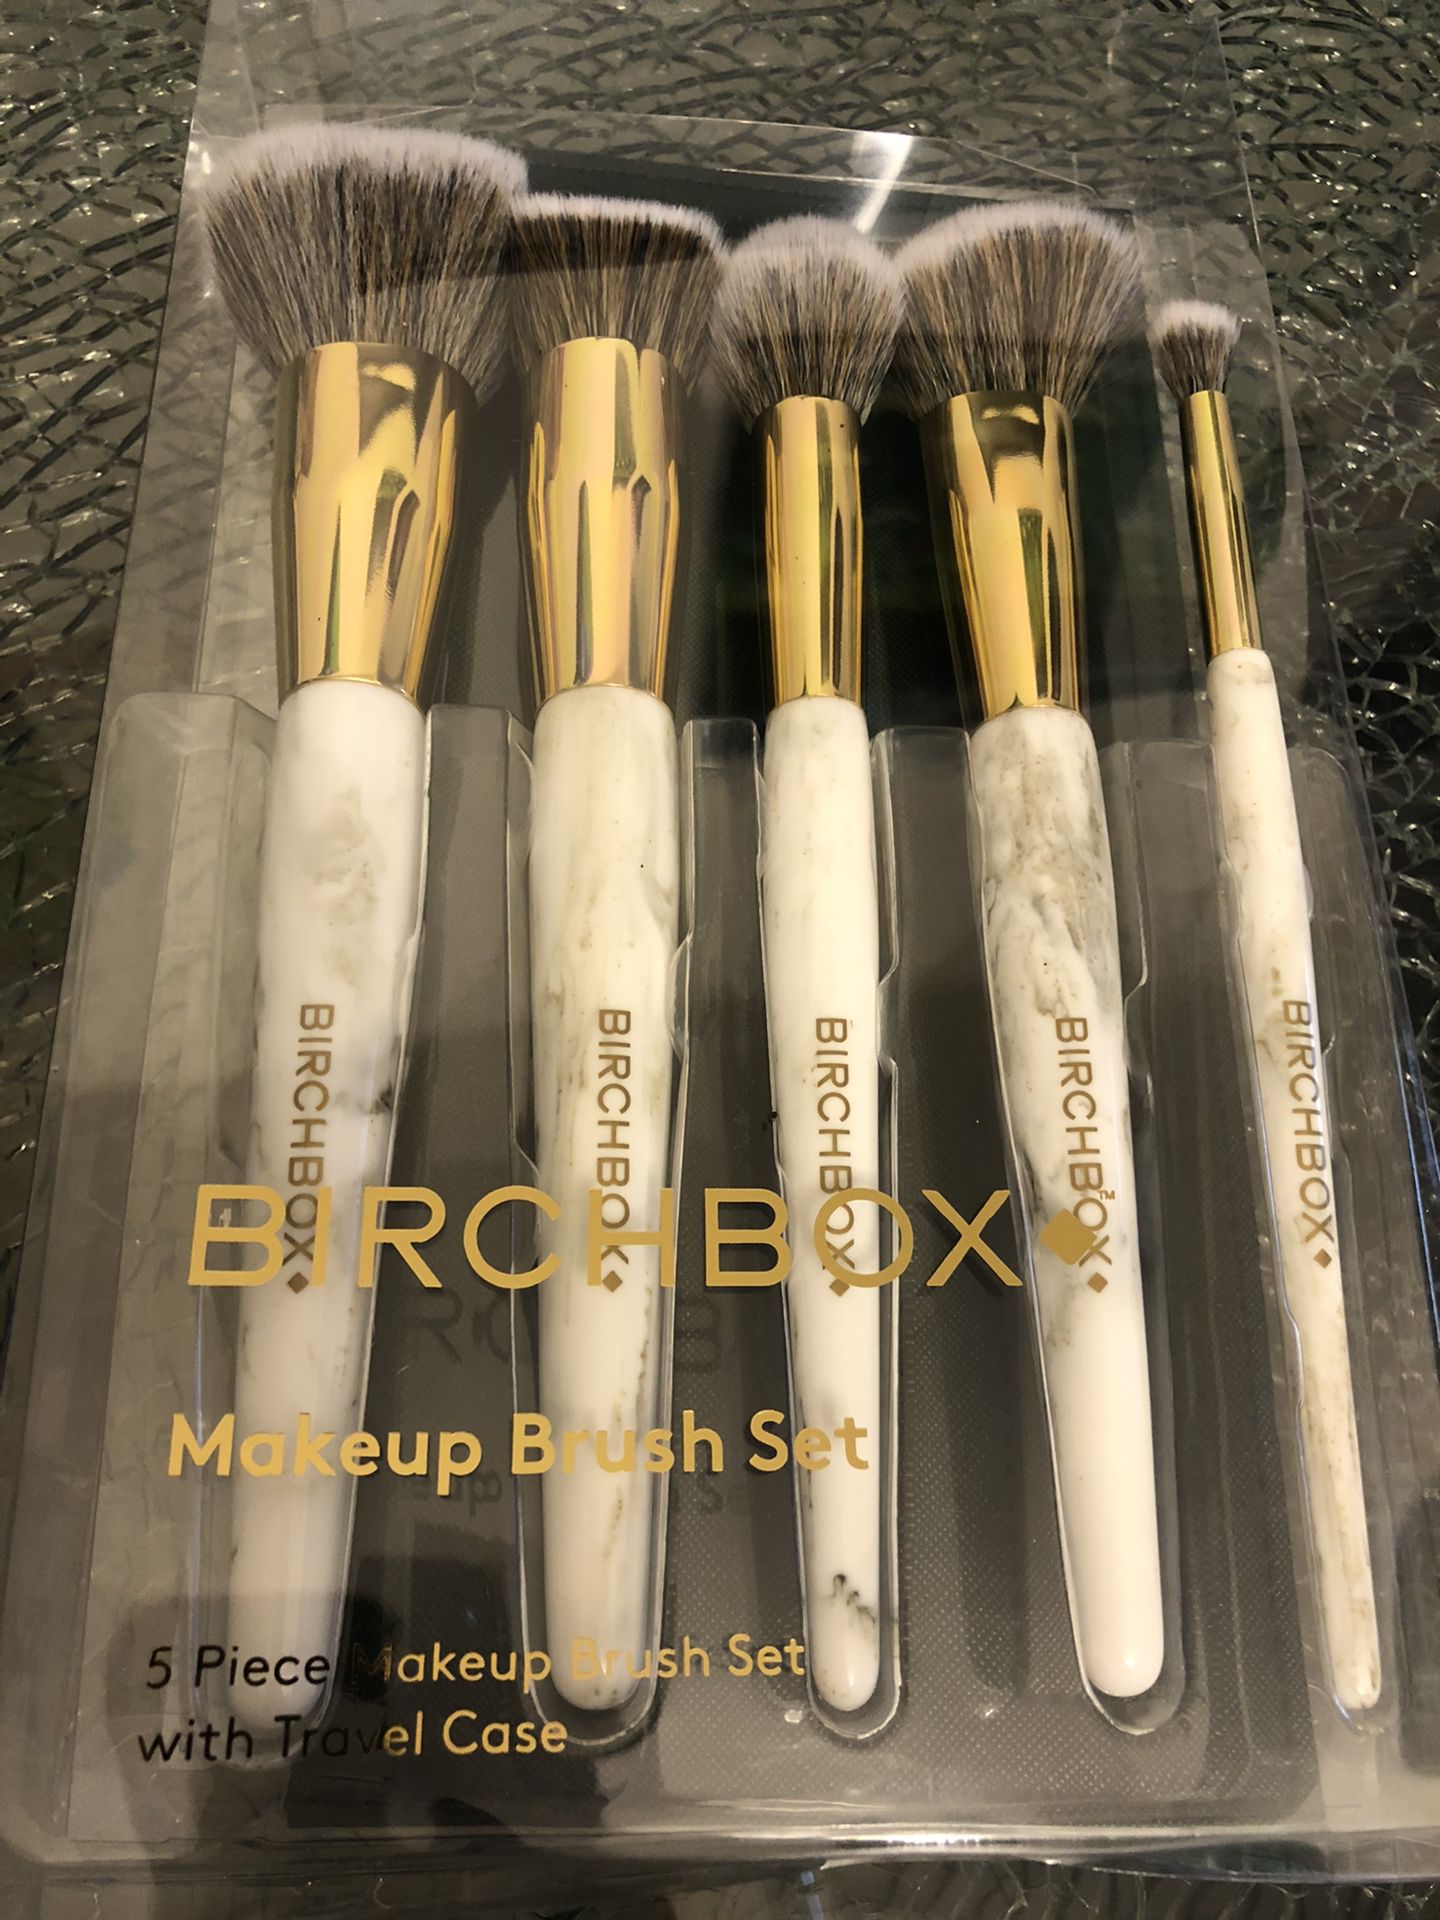 Birchbox Makeup Brush Set with Travel Case